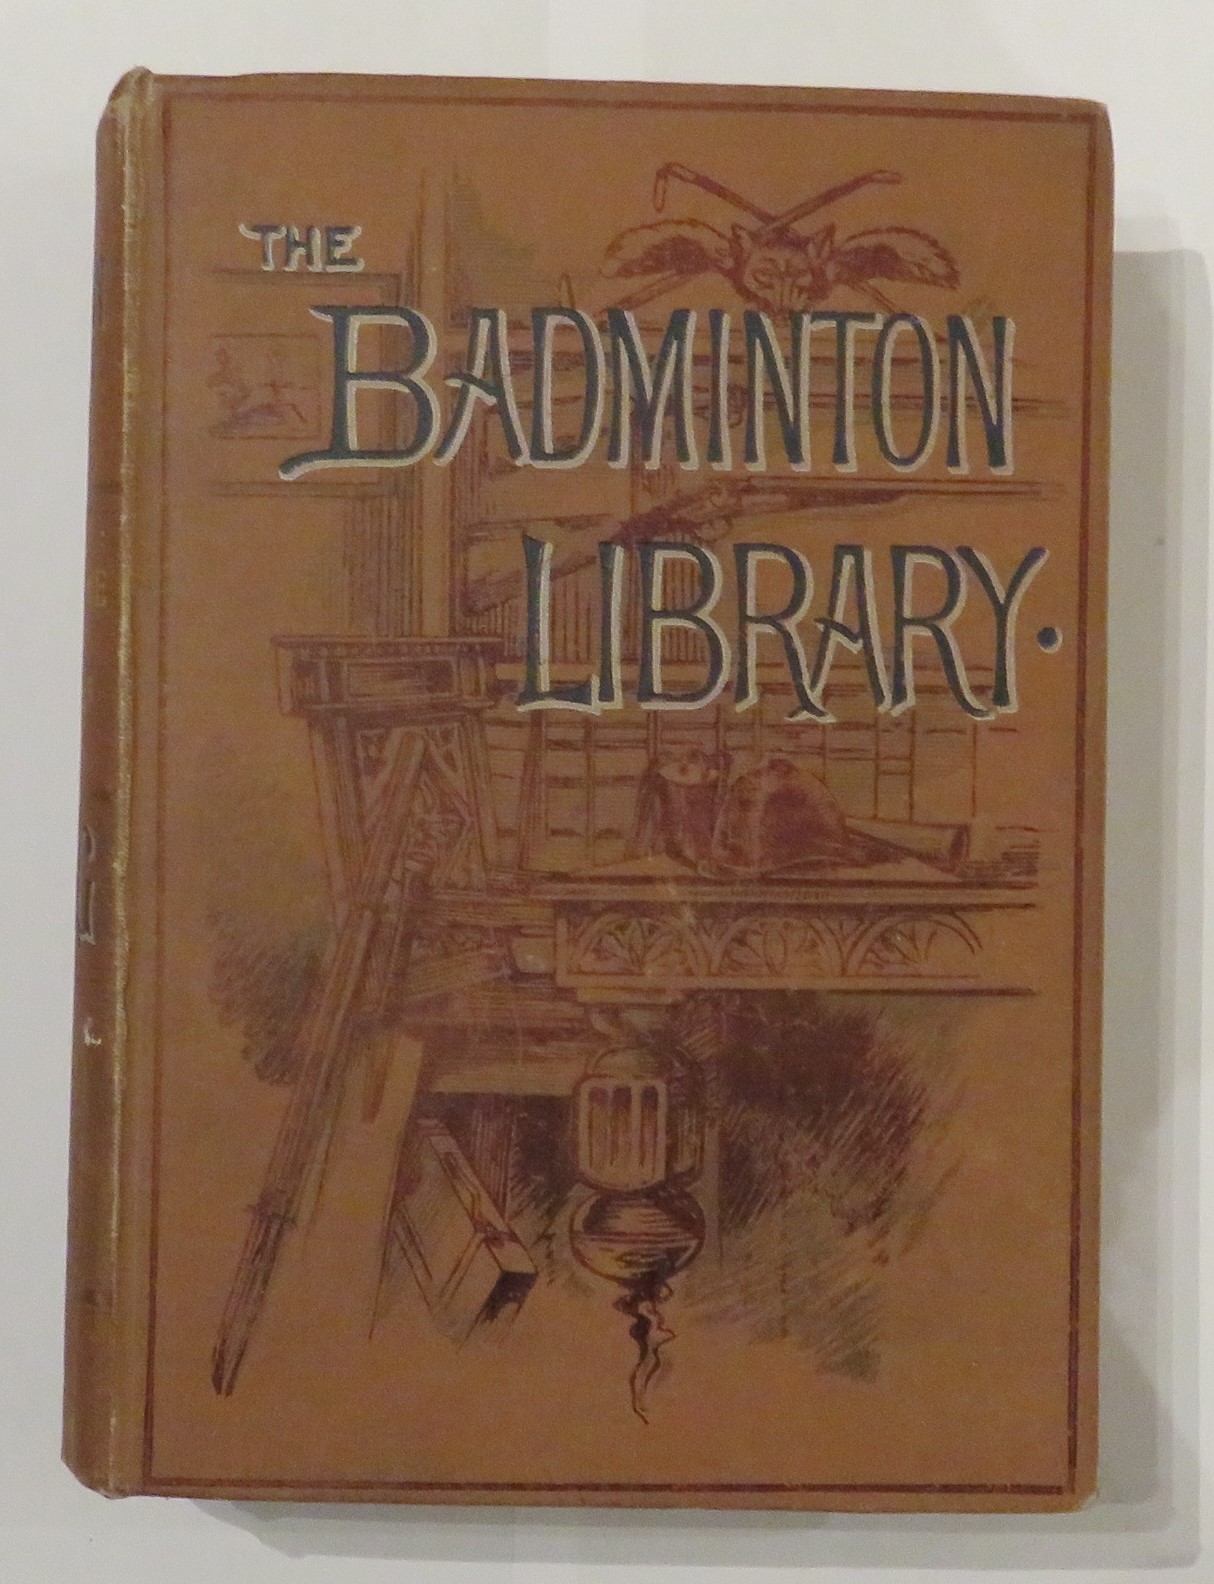 The Badminton Library: Dancing